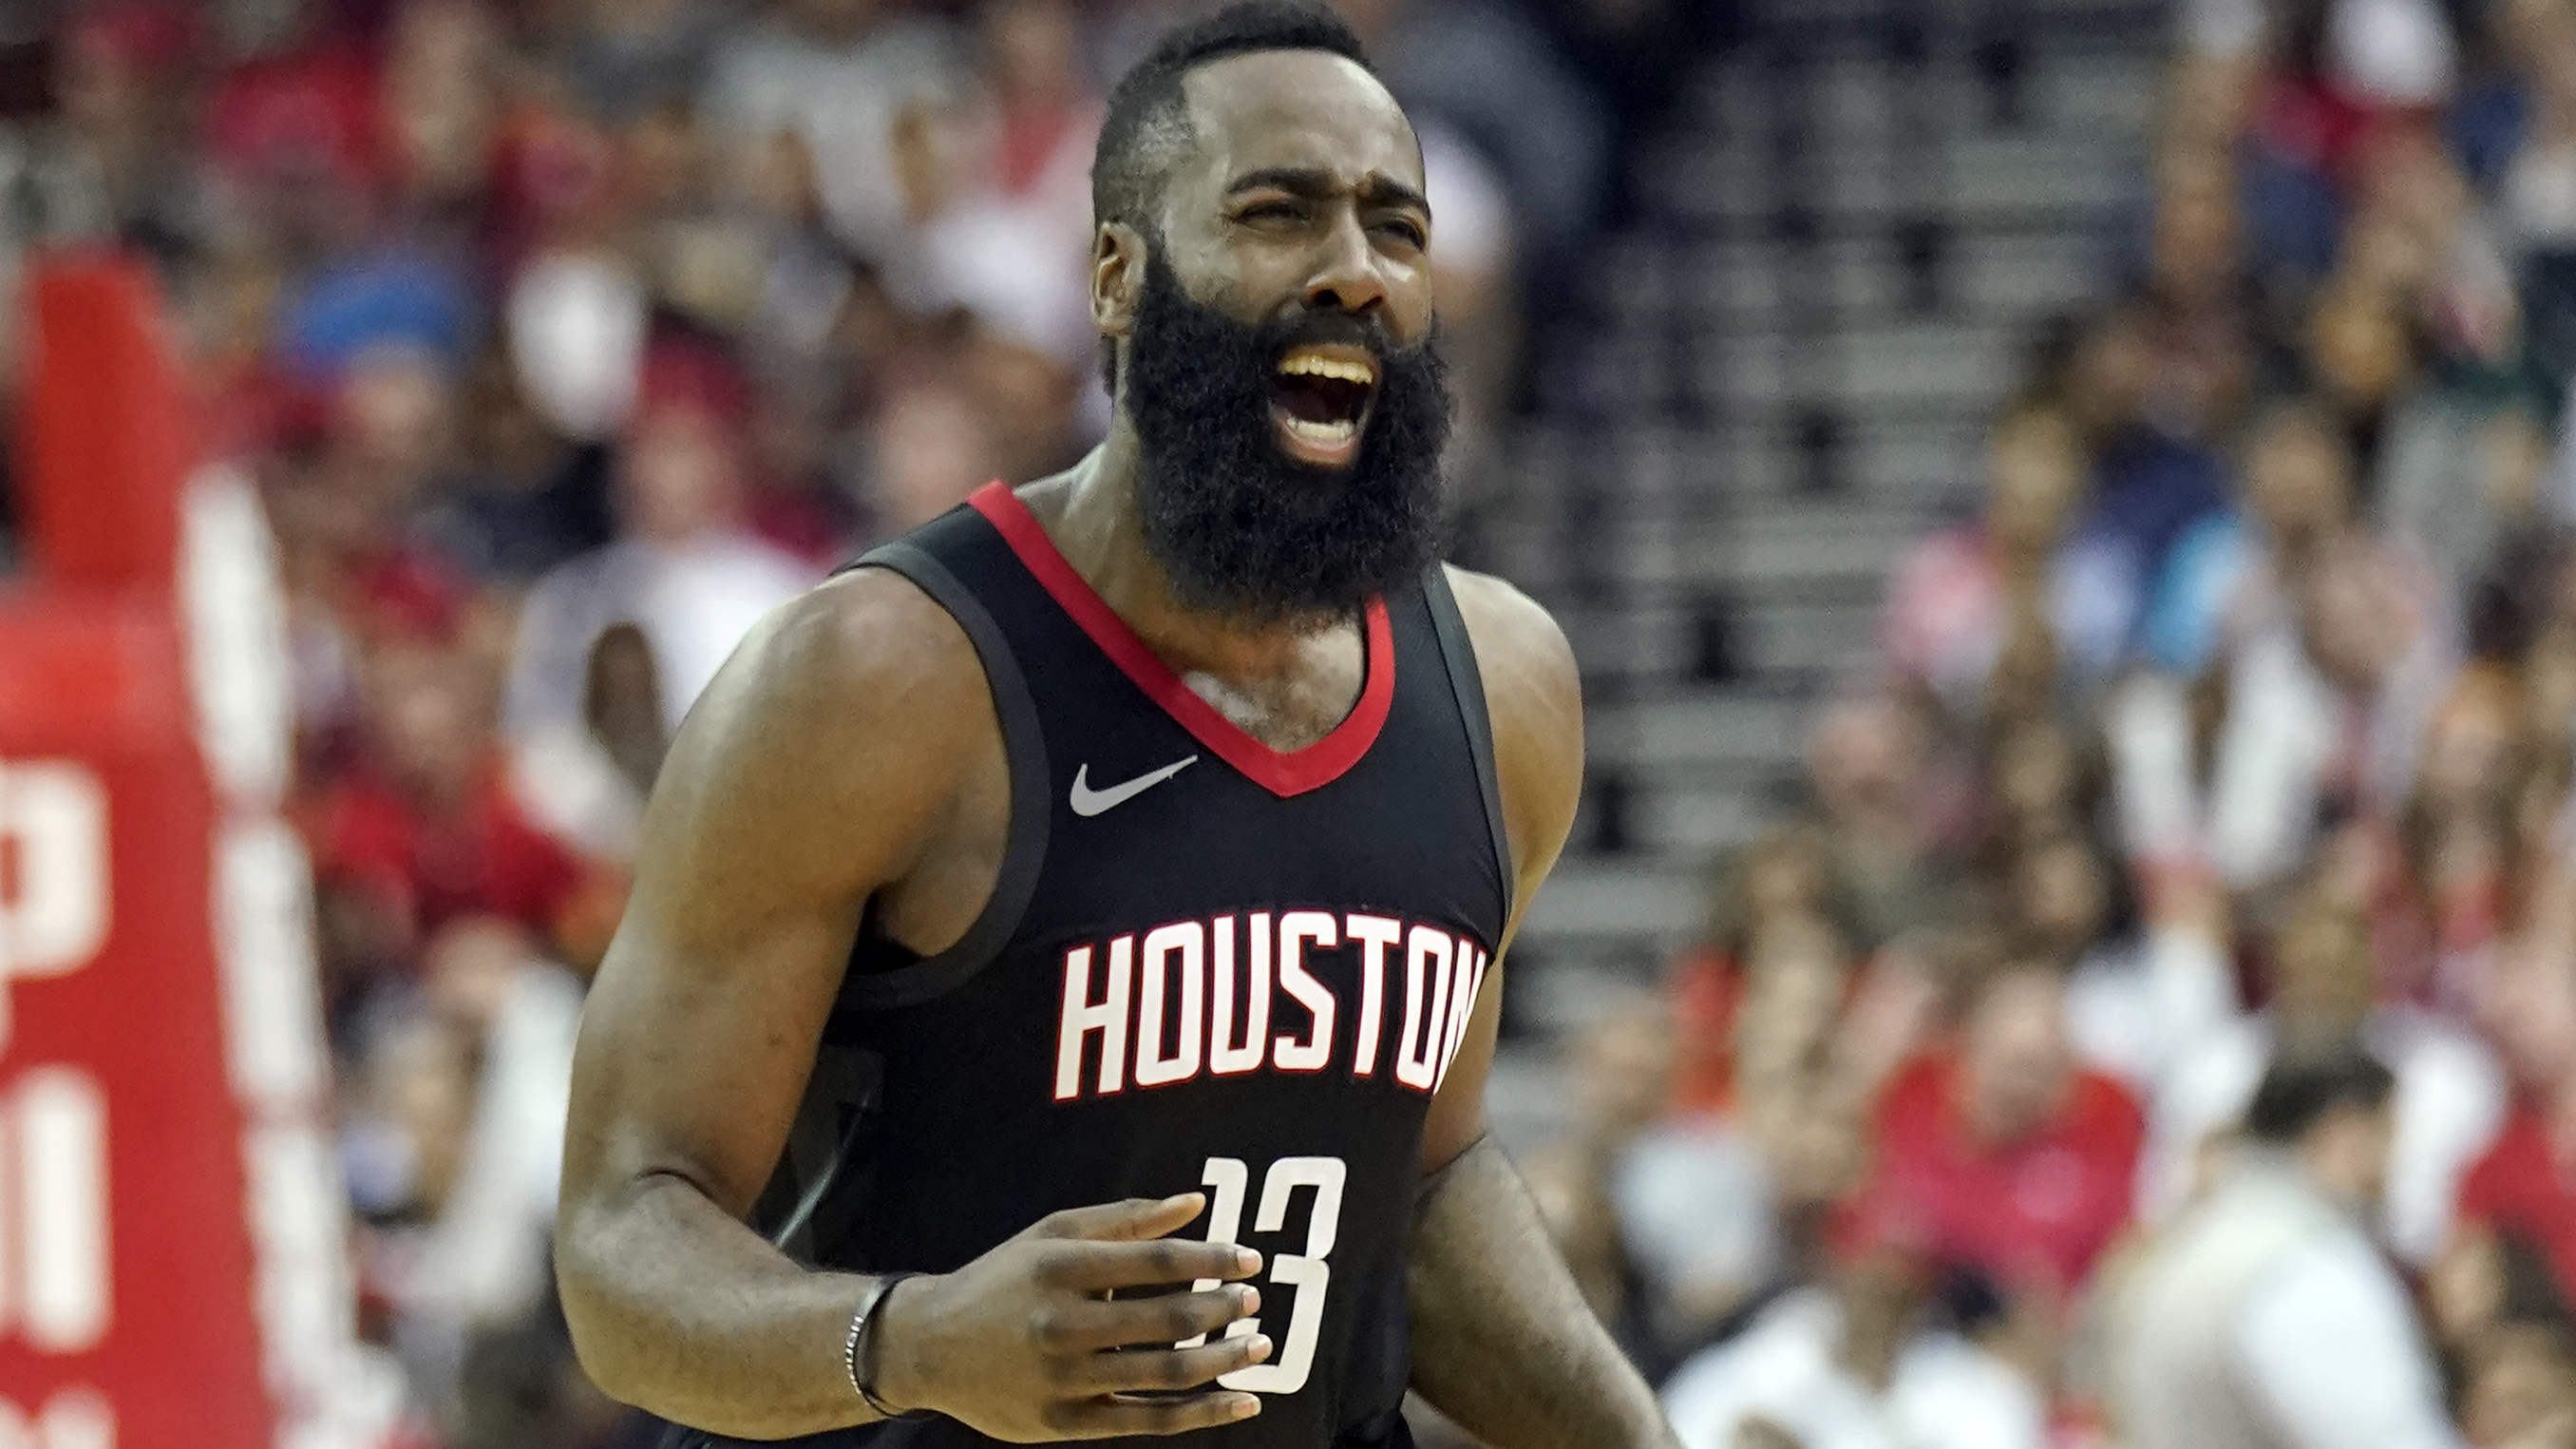 Houston Rockets Vs Dallas Mavericks Free Live Stream 7 31 20 Watch James Harden Vs Luka Doncic In Nba Restart Online Time Tv Channel Nj Com